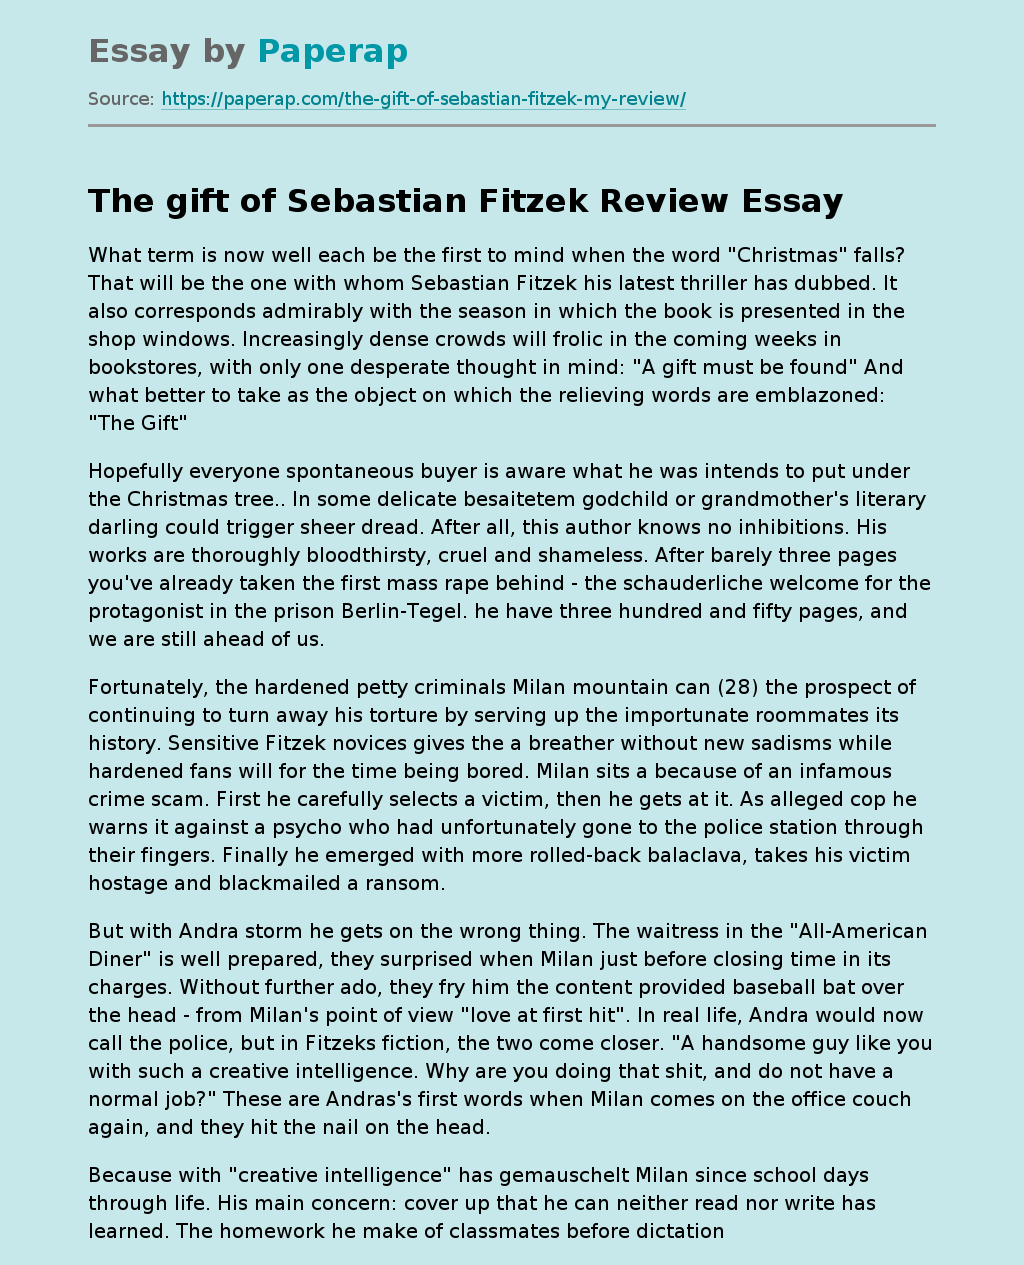 The gift of Sebastian Fitzek Review